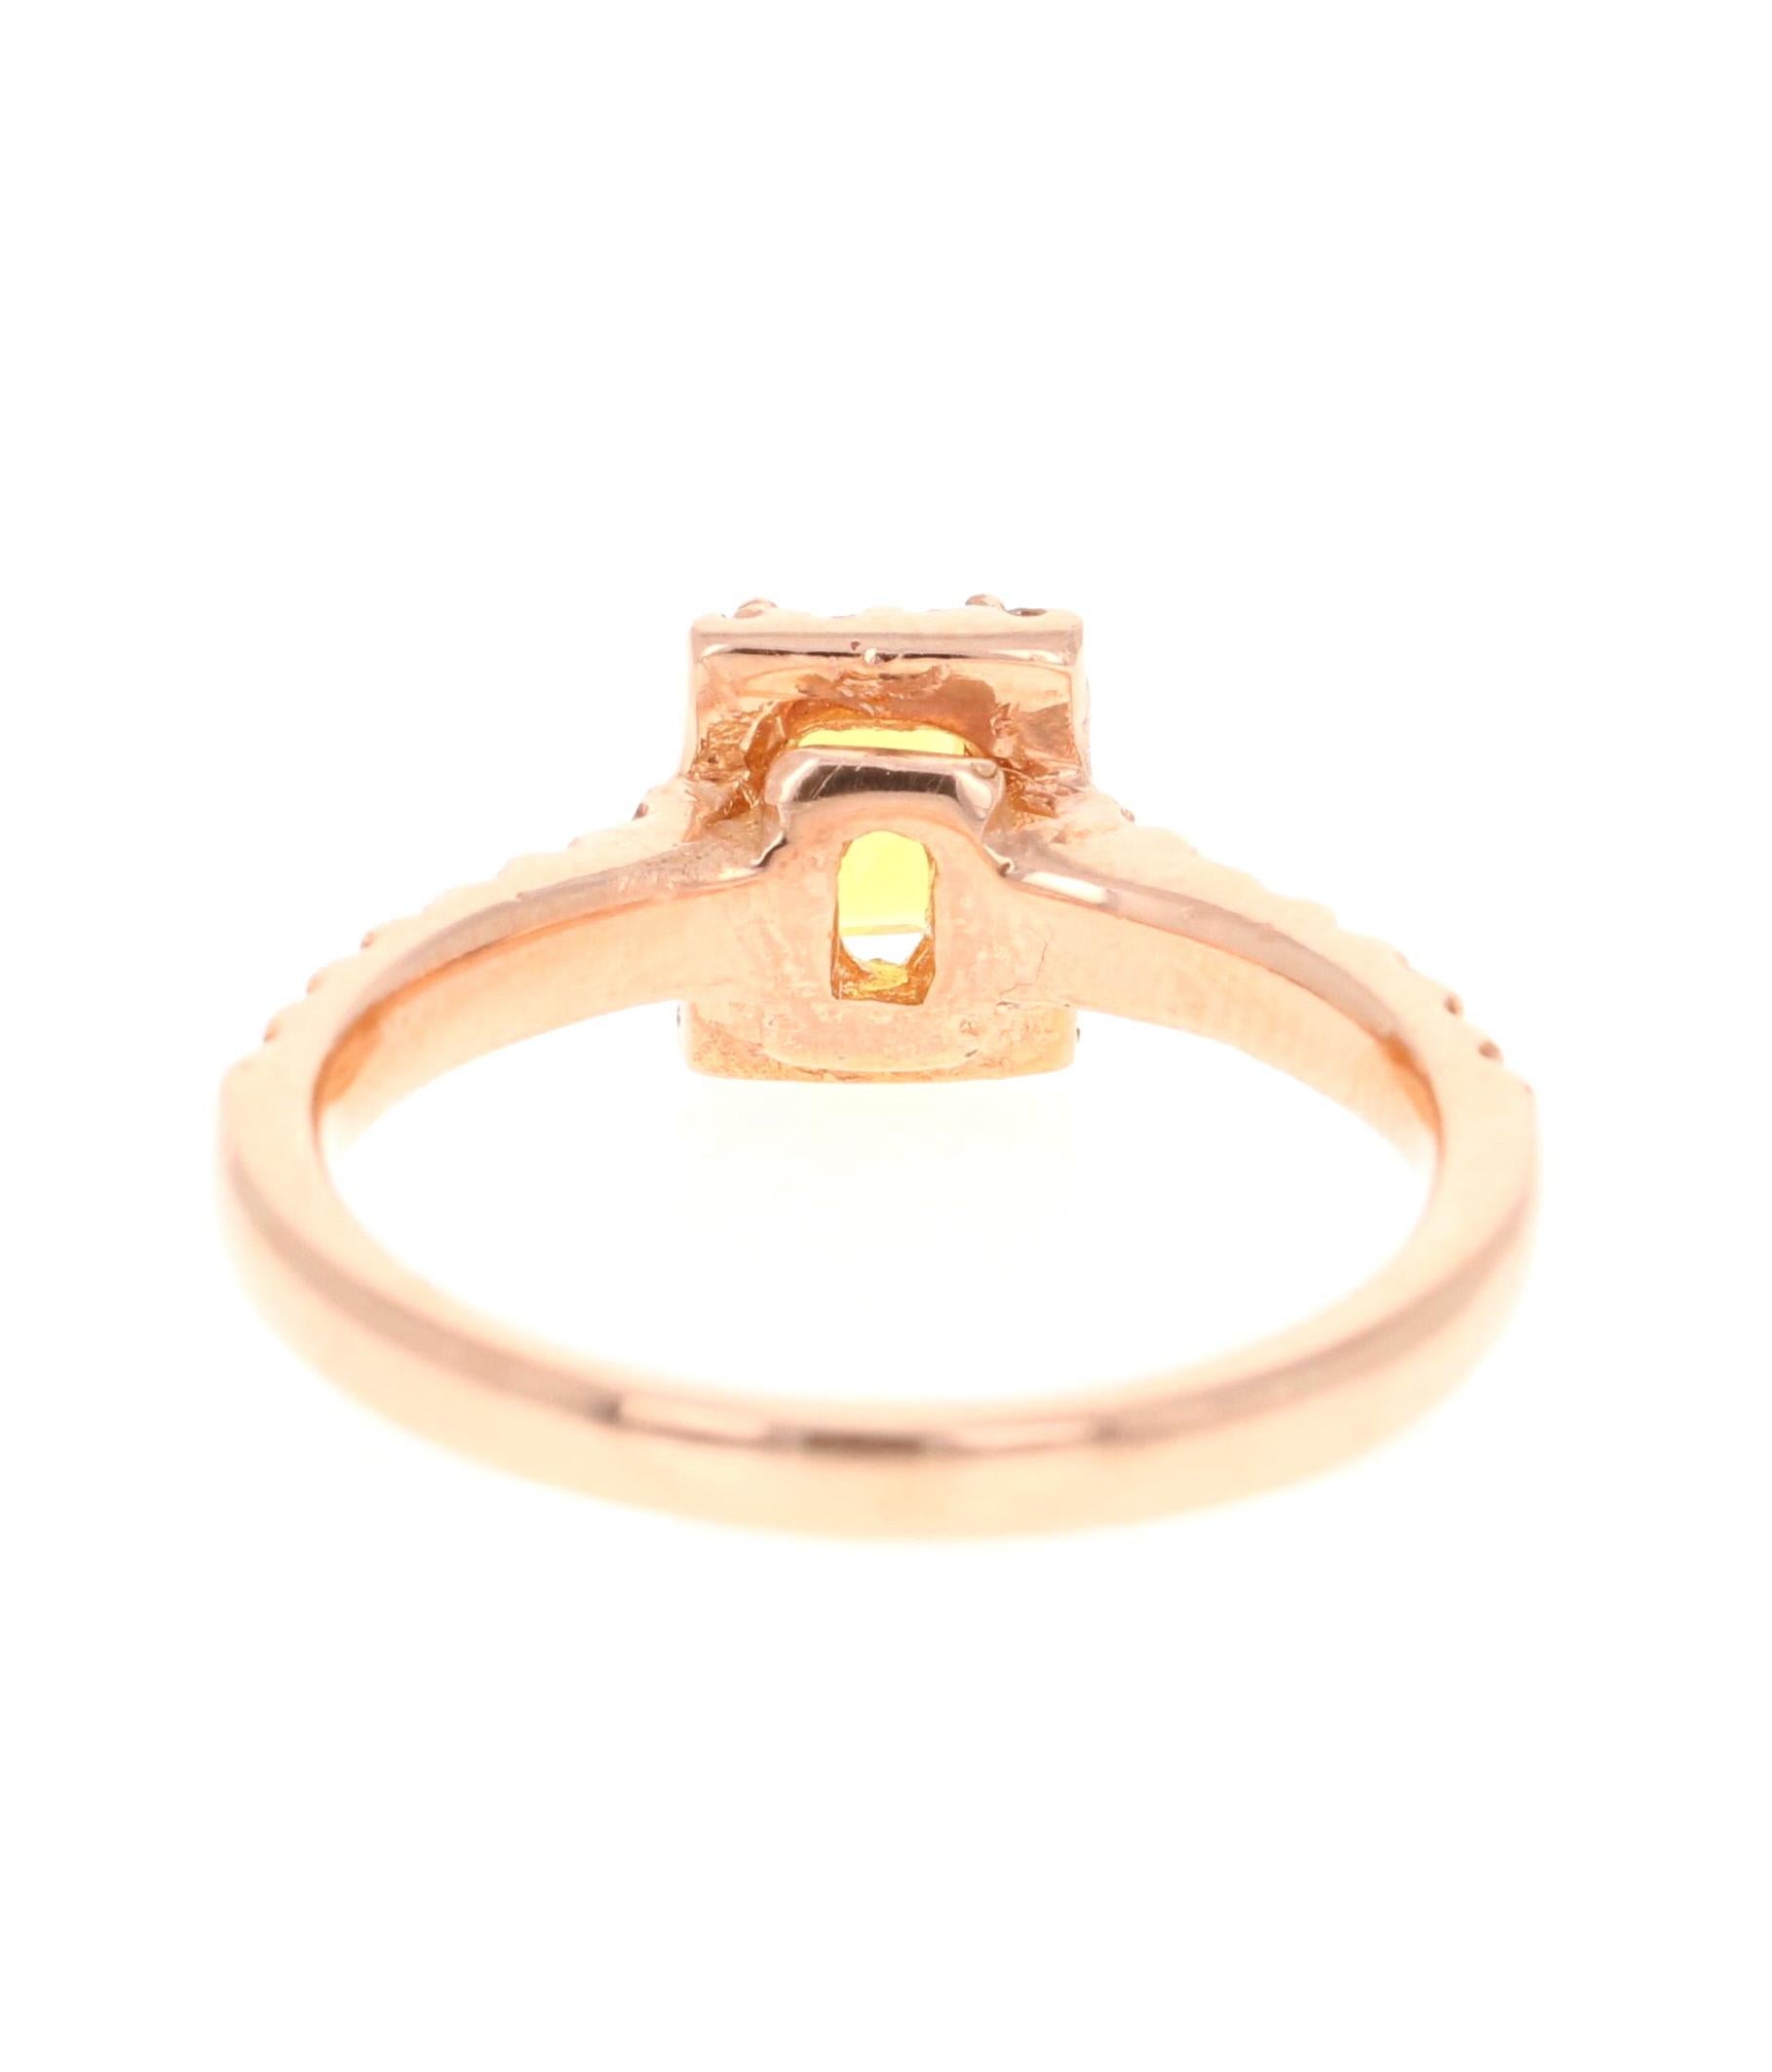 Emerald Cut 1.16 Carat Yellow Sapphire and Diamond 18 Karat Rose Gold Ring